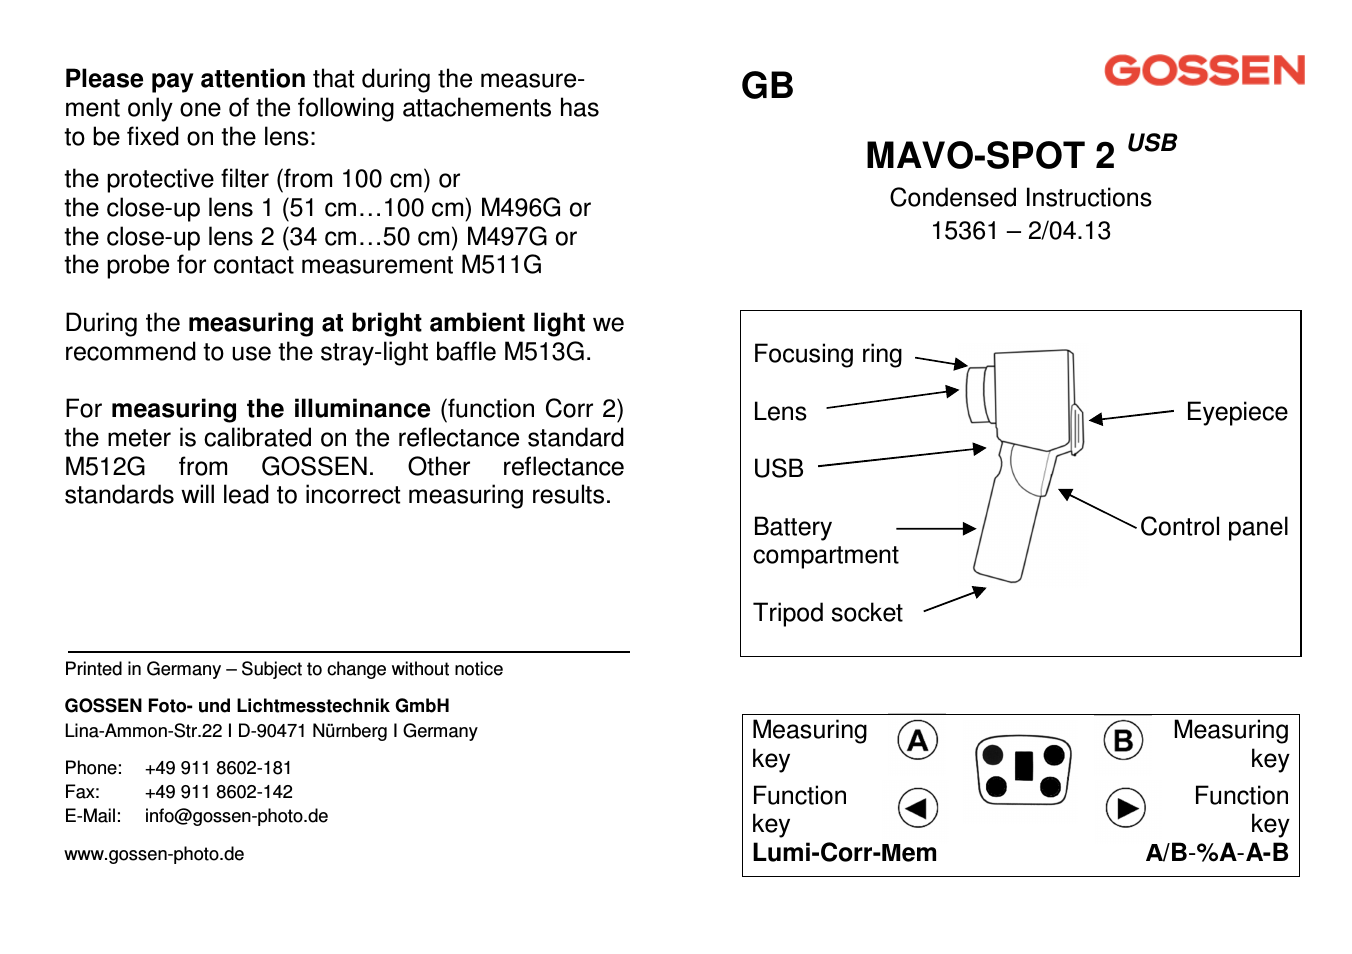 Mavo-Spot 2 USB Essentials